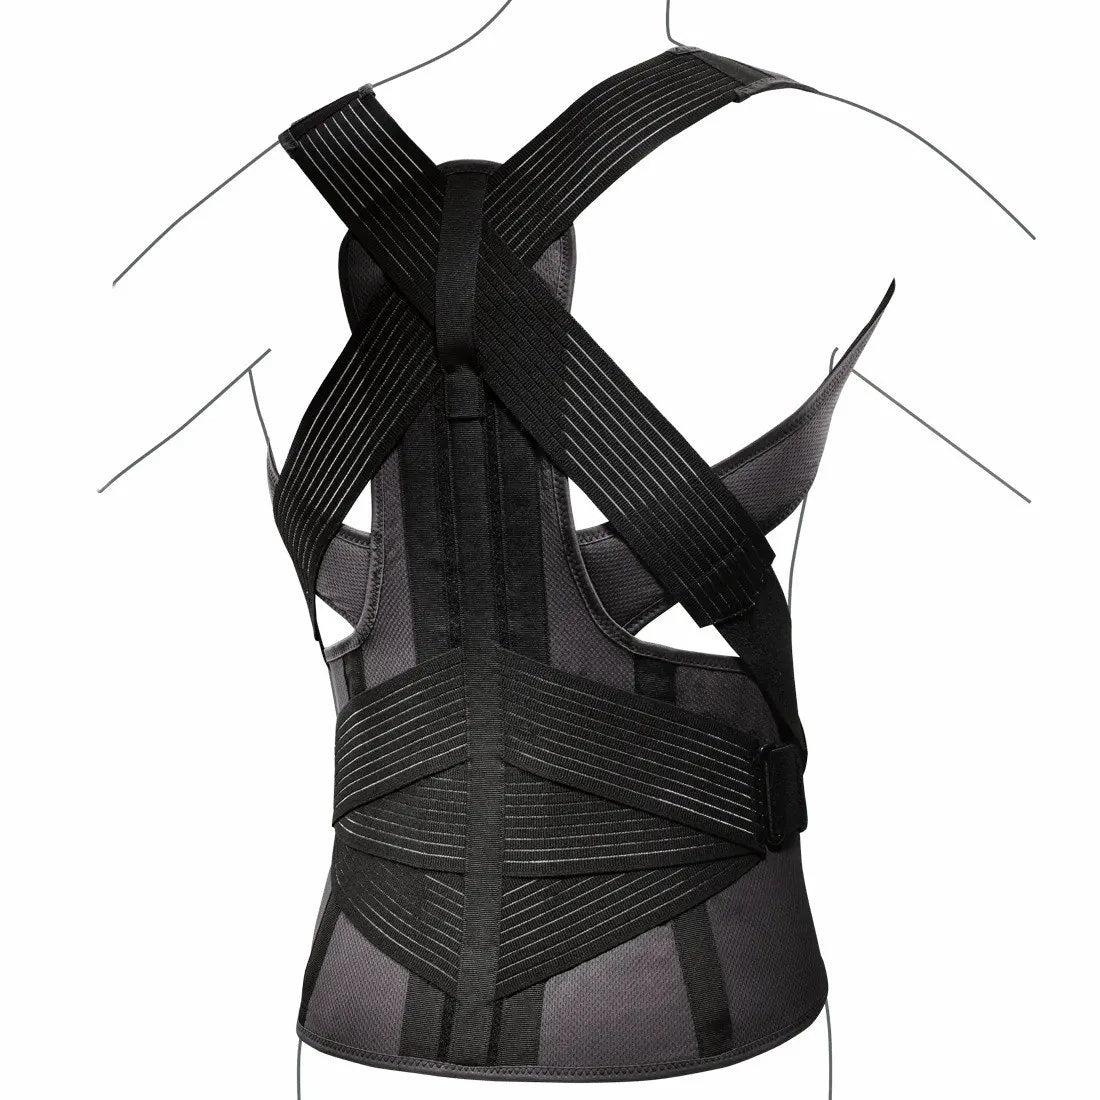 Dorso-lumbar semi-rigid corset LINEA G+